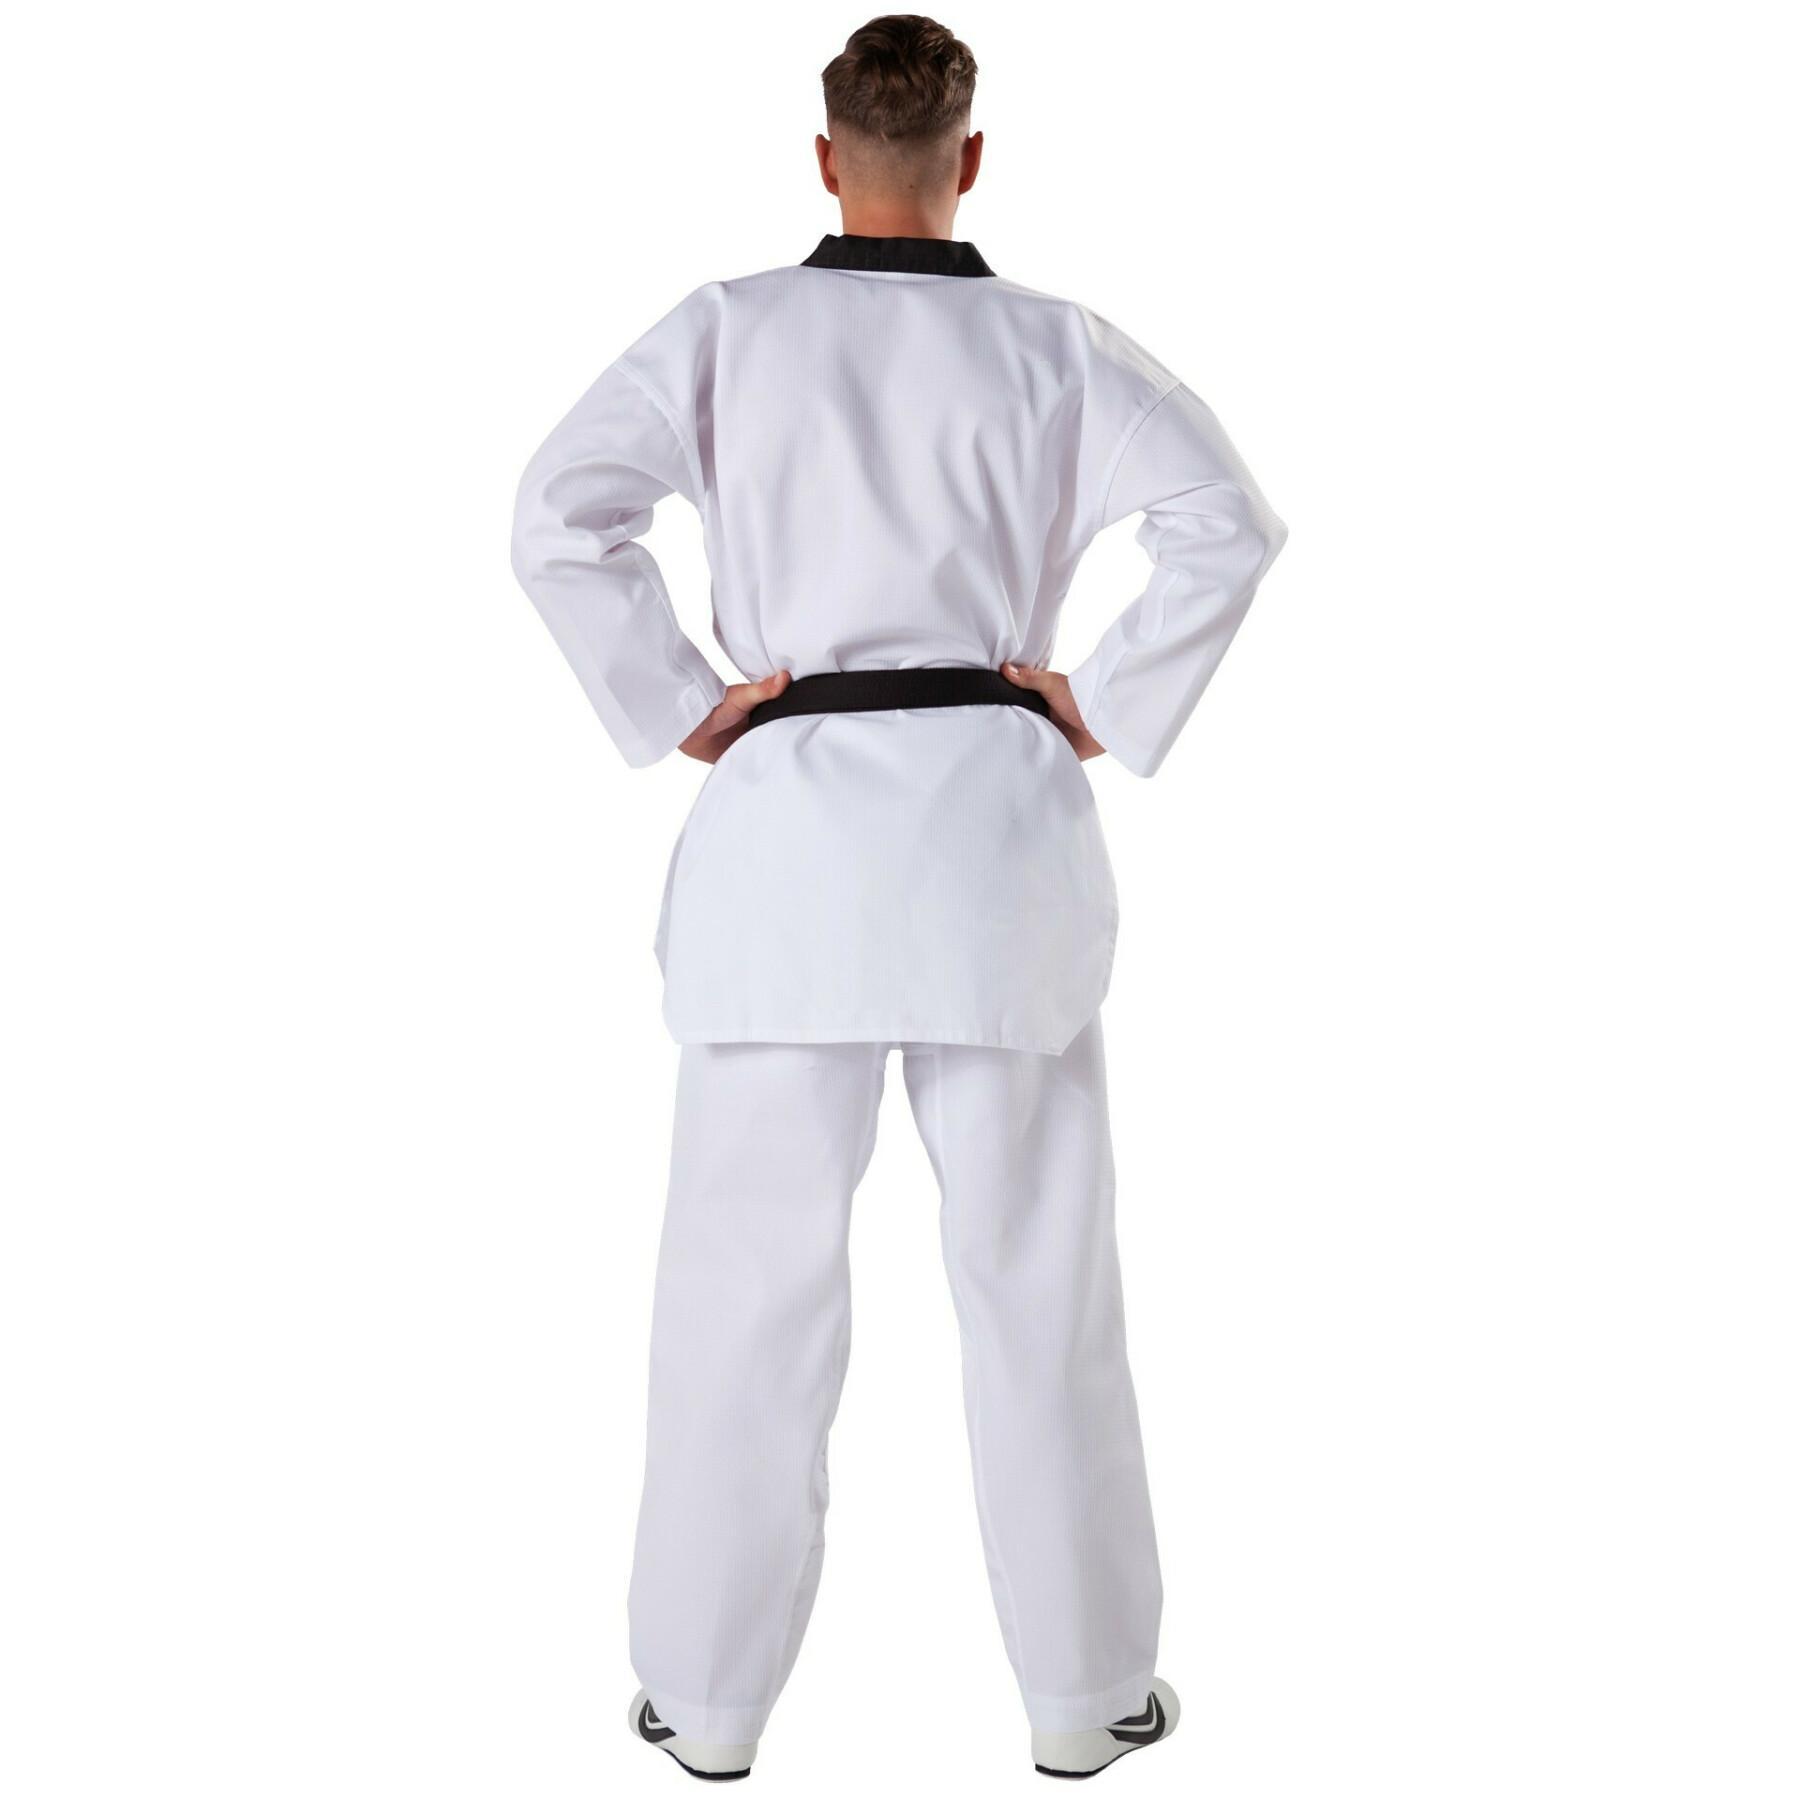 Kimono Taekwondo Kwon Tarfighter